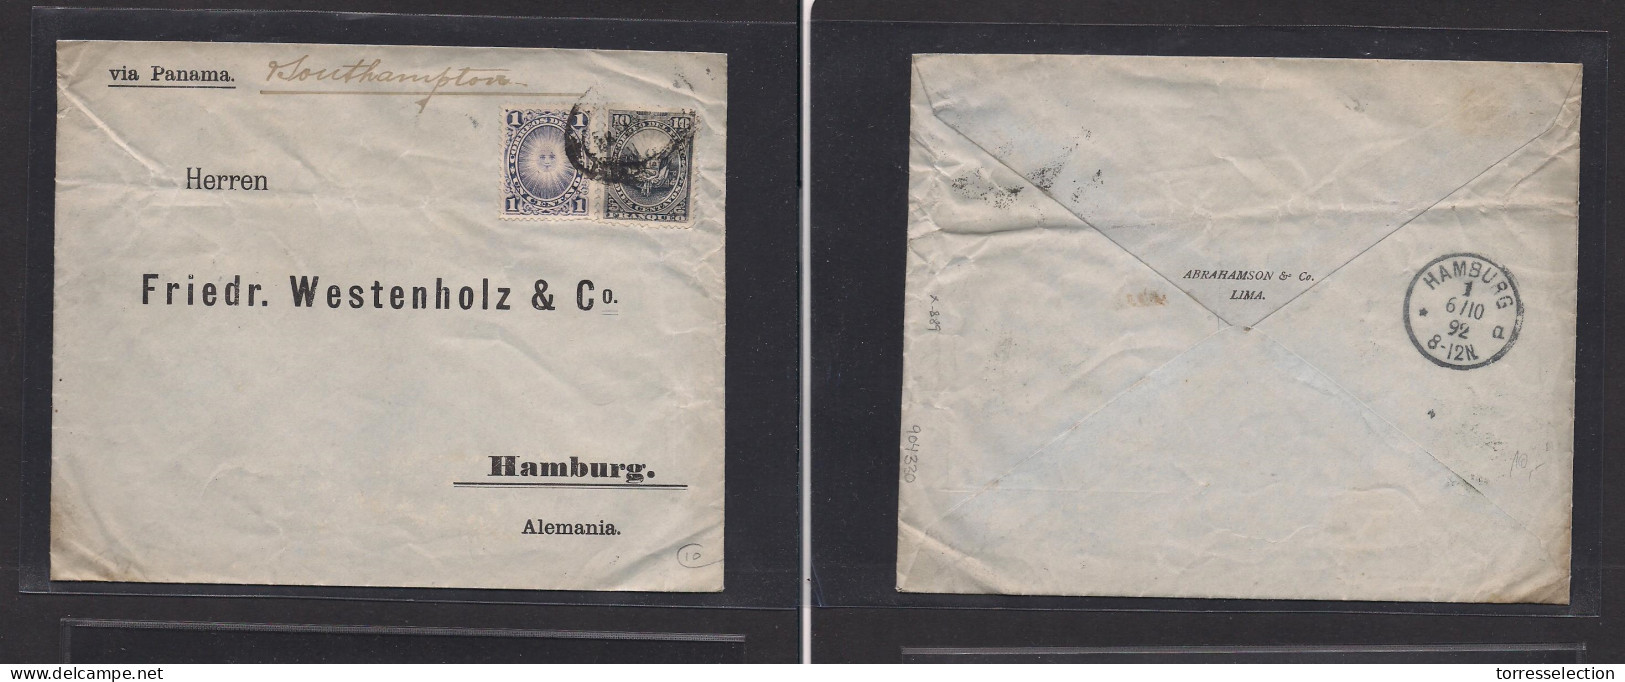 PERU. Peru - Cover - 1892 Lima To Hamburg Germany Fkd Env 11c Rate Via Panama Southampton. Easy Deal. XSALE. - Pérou